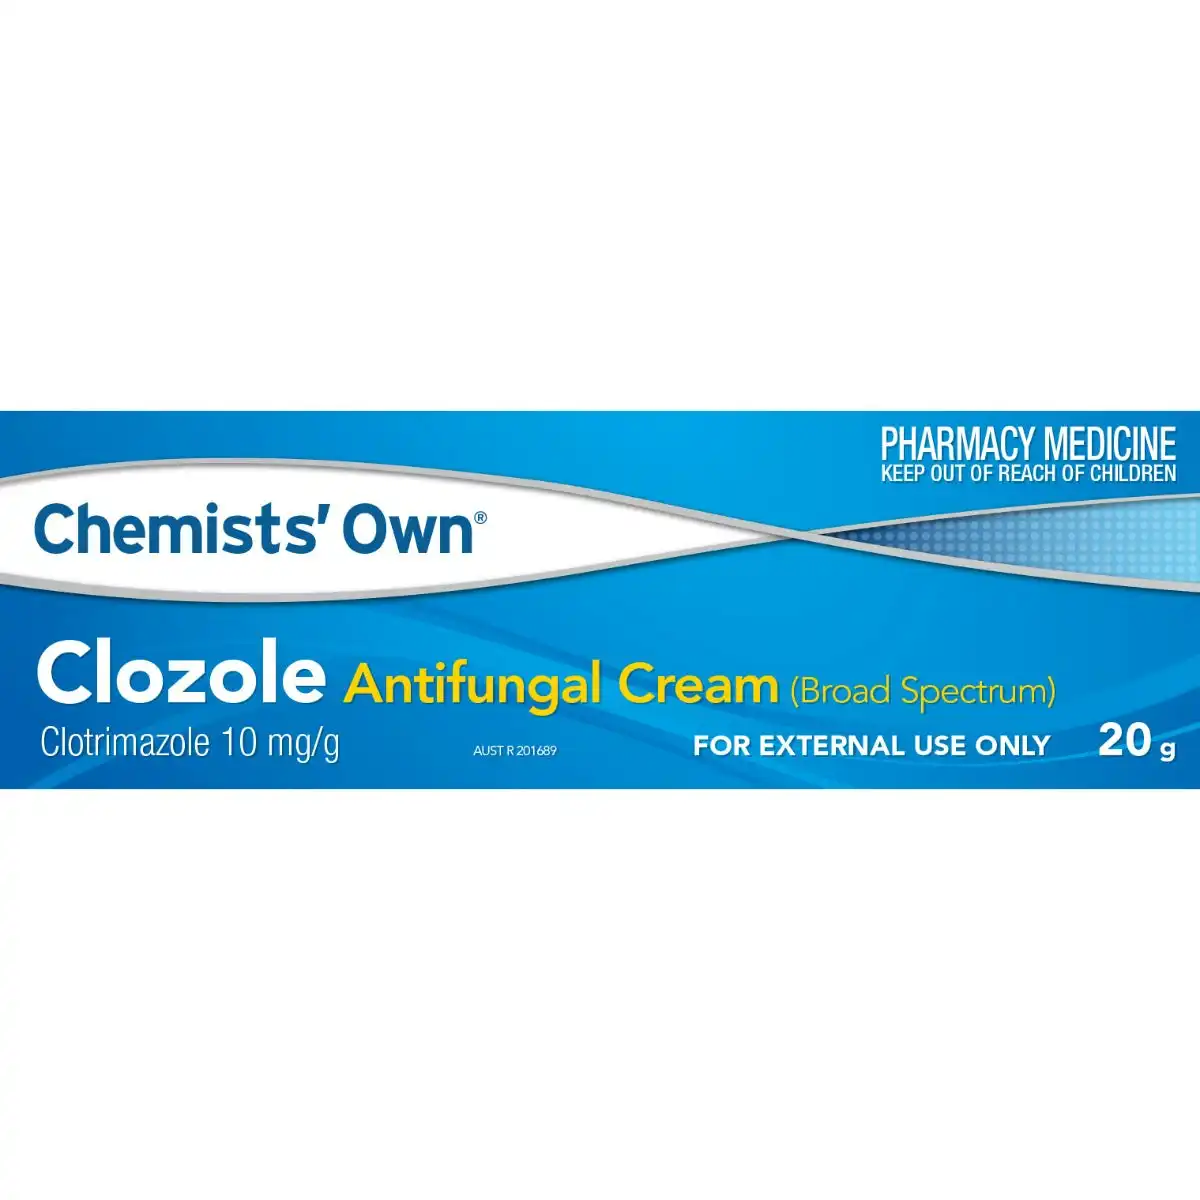 Chemists' Own Clozole Antifungal Cream (Broad Spectrum) 20g (Generic for CANESTEN)